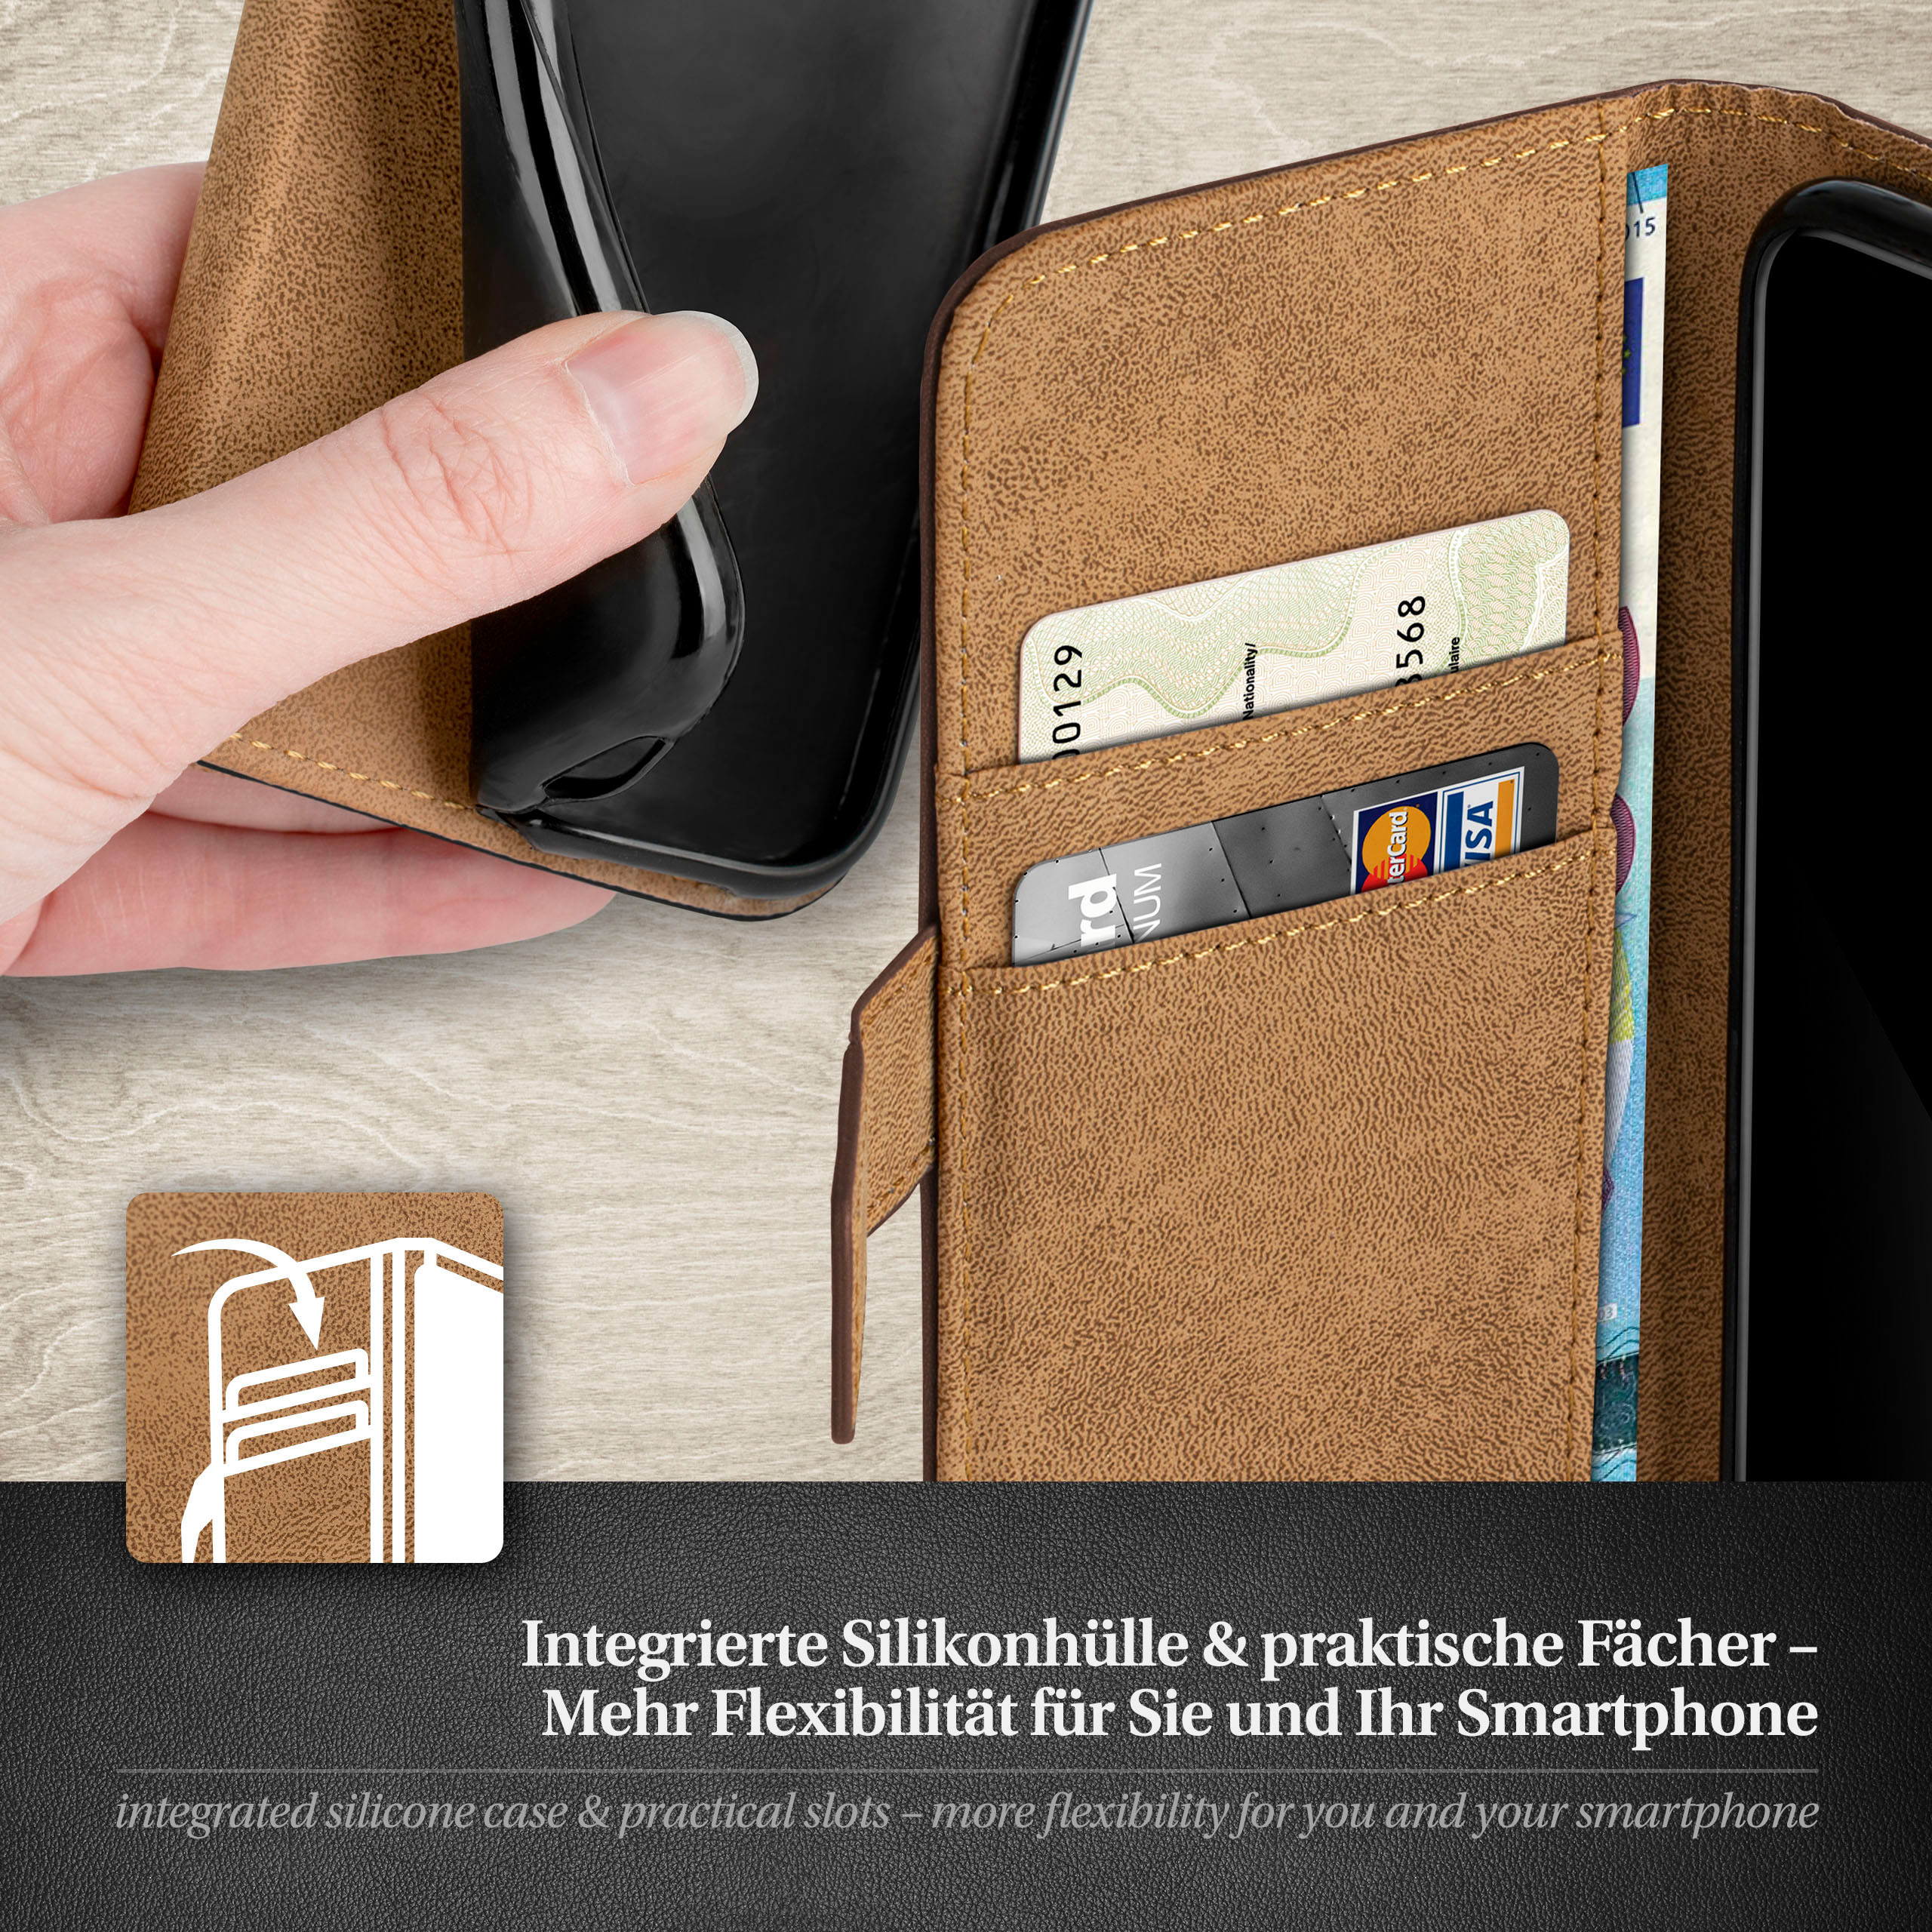 Case, Book Samsung, MOEX S20 Galaxy Plus Oxide-Brown Bookcover, 5G, /